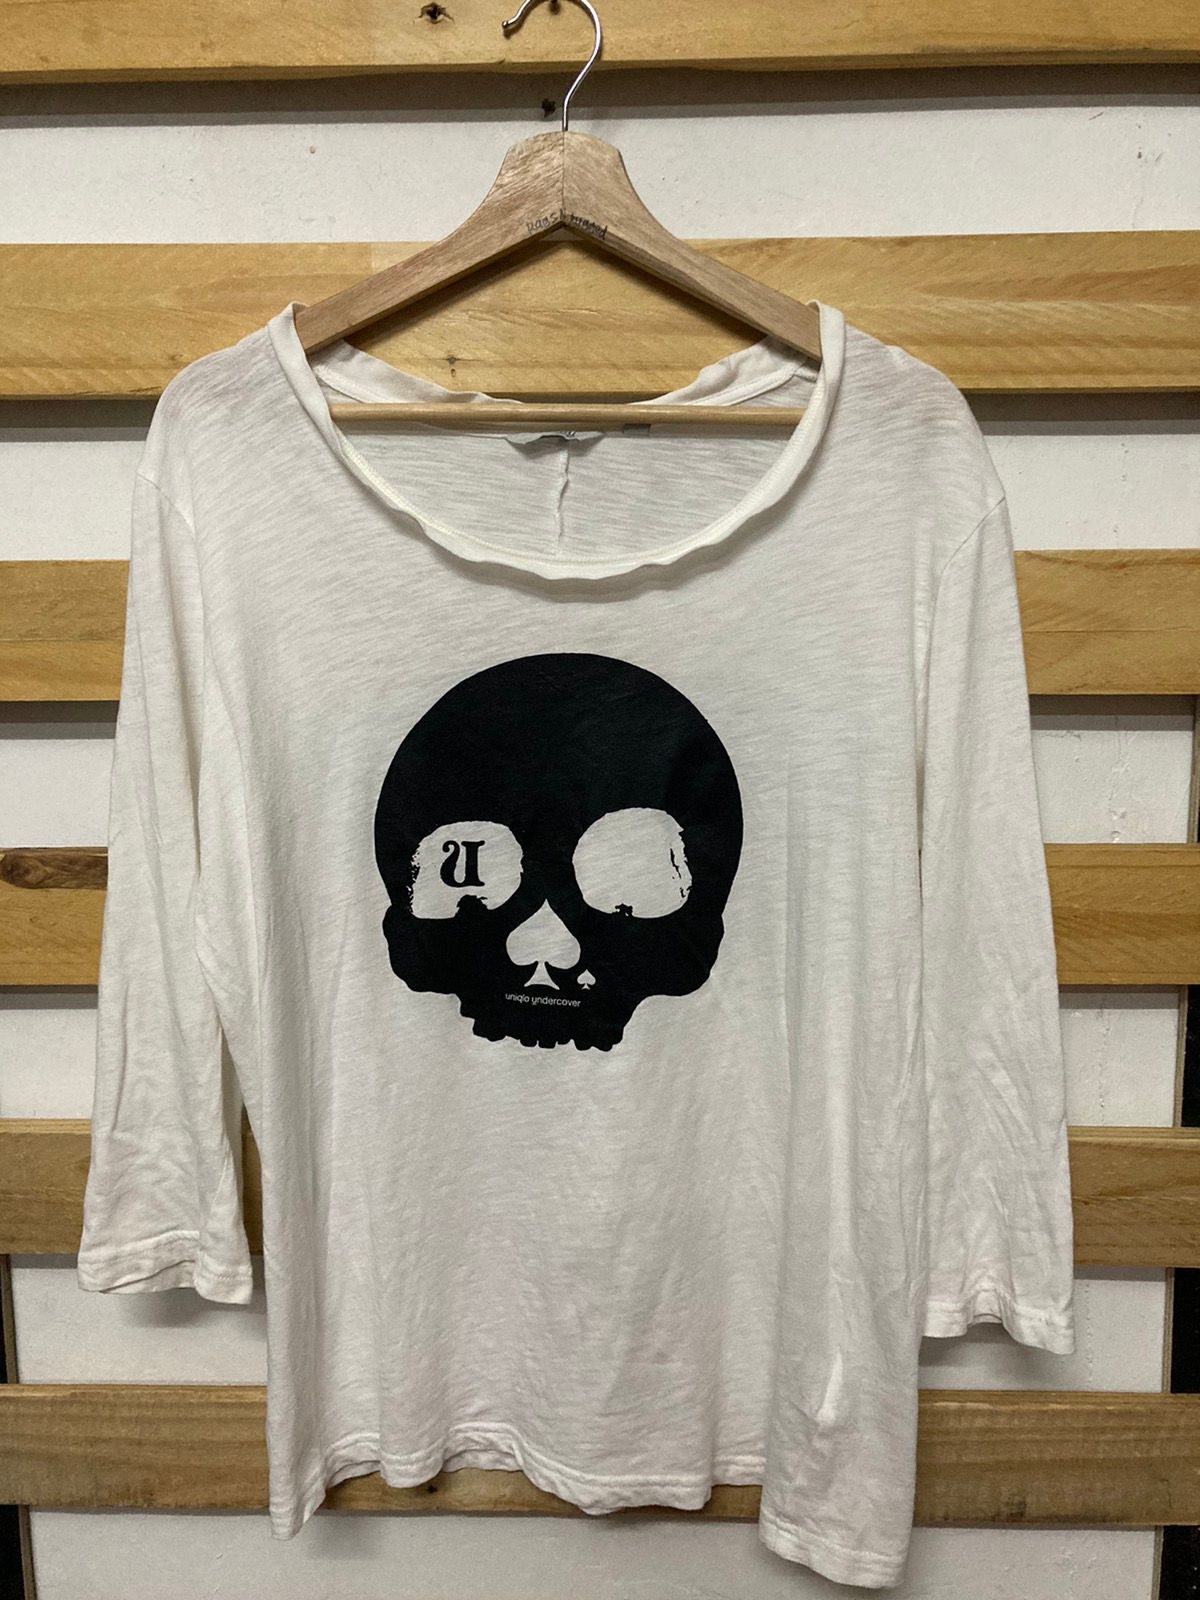 Uniqlo x Undercover Spade Skull LS Tshirt - 1